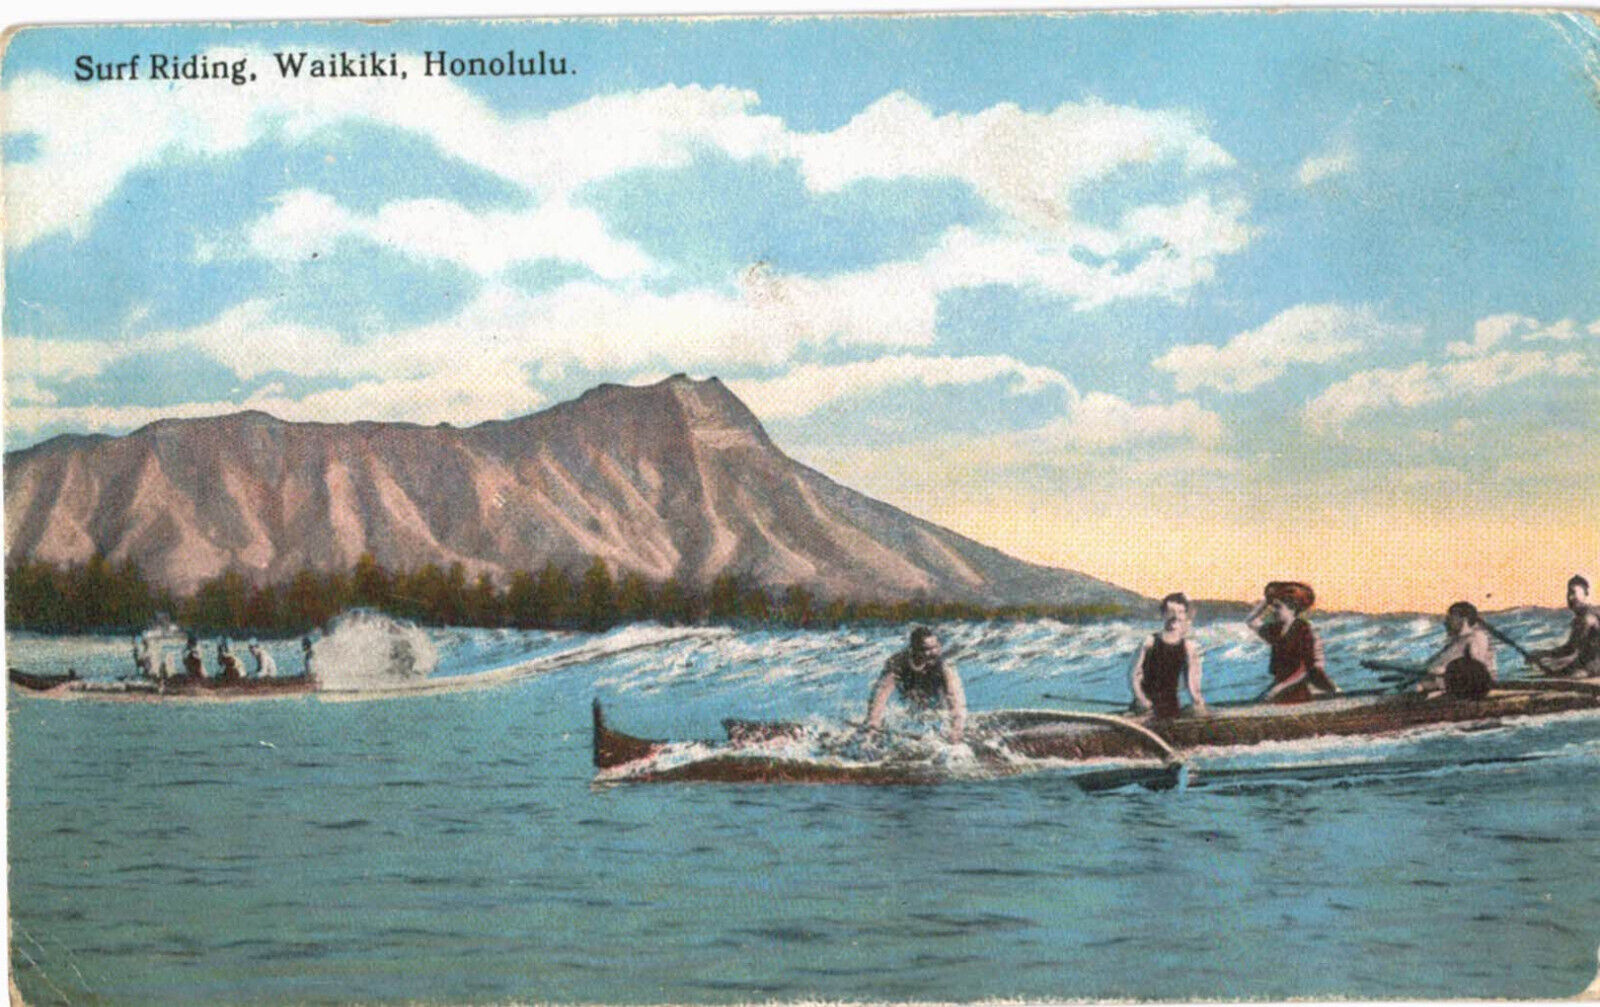 Hawaii - Surf Riding, Waikiki, Honolulu - c1910s South Seas Curio Co. Postcard